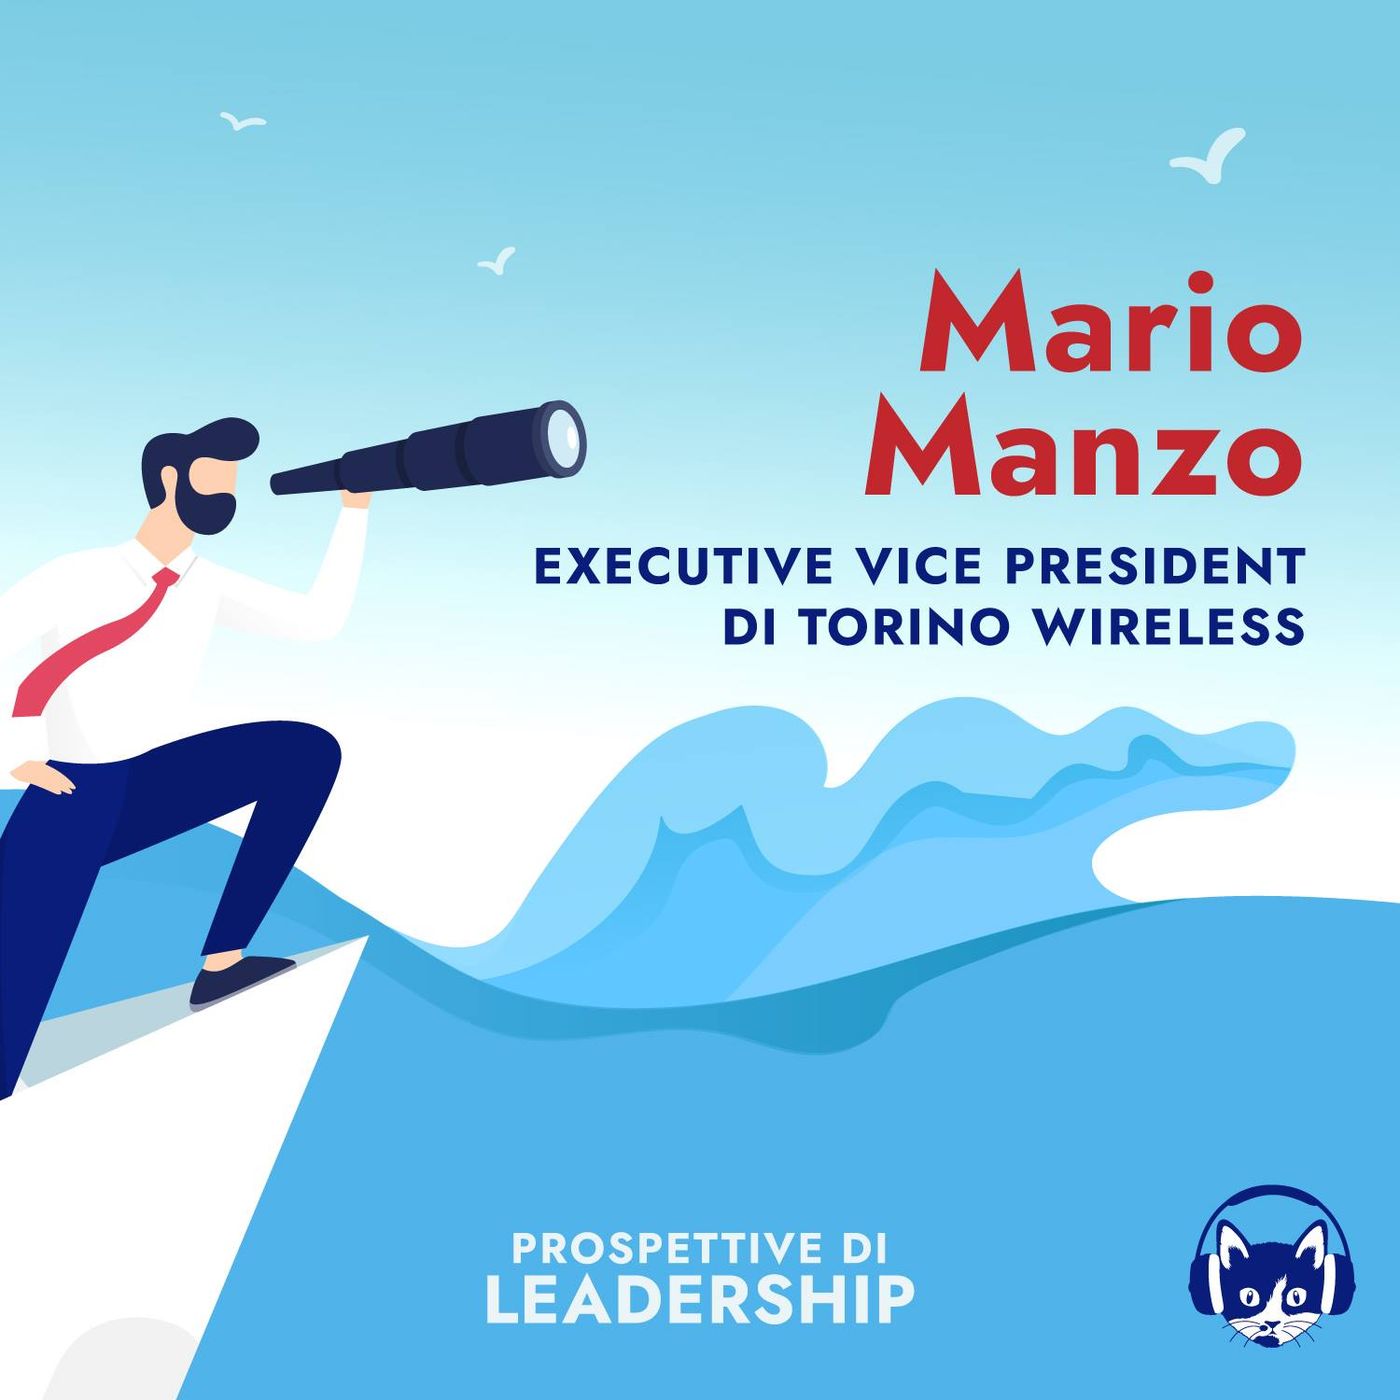 04. Mario Manzo, Executive Vice President di Torino Wireless